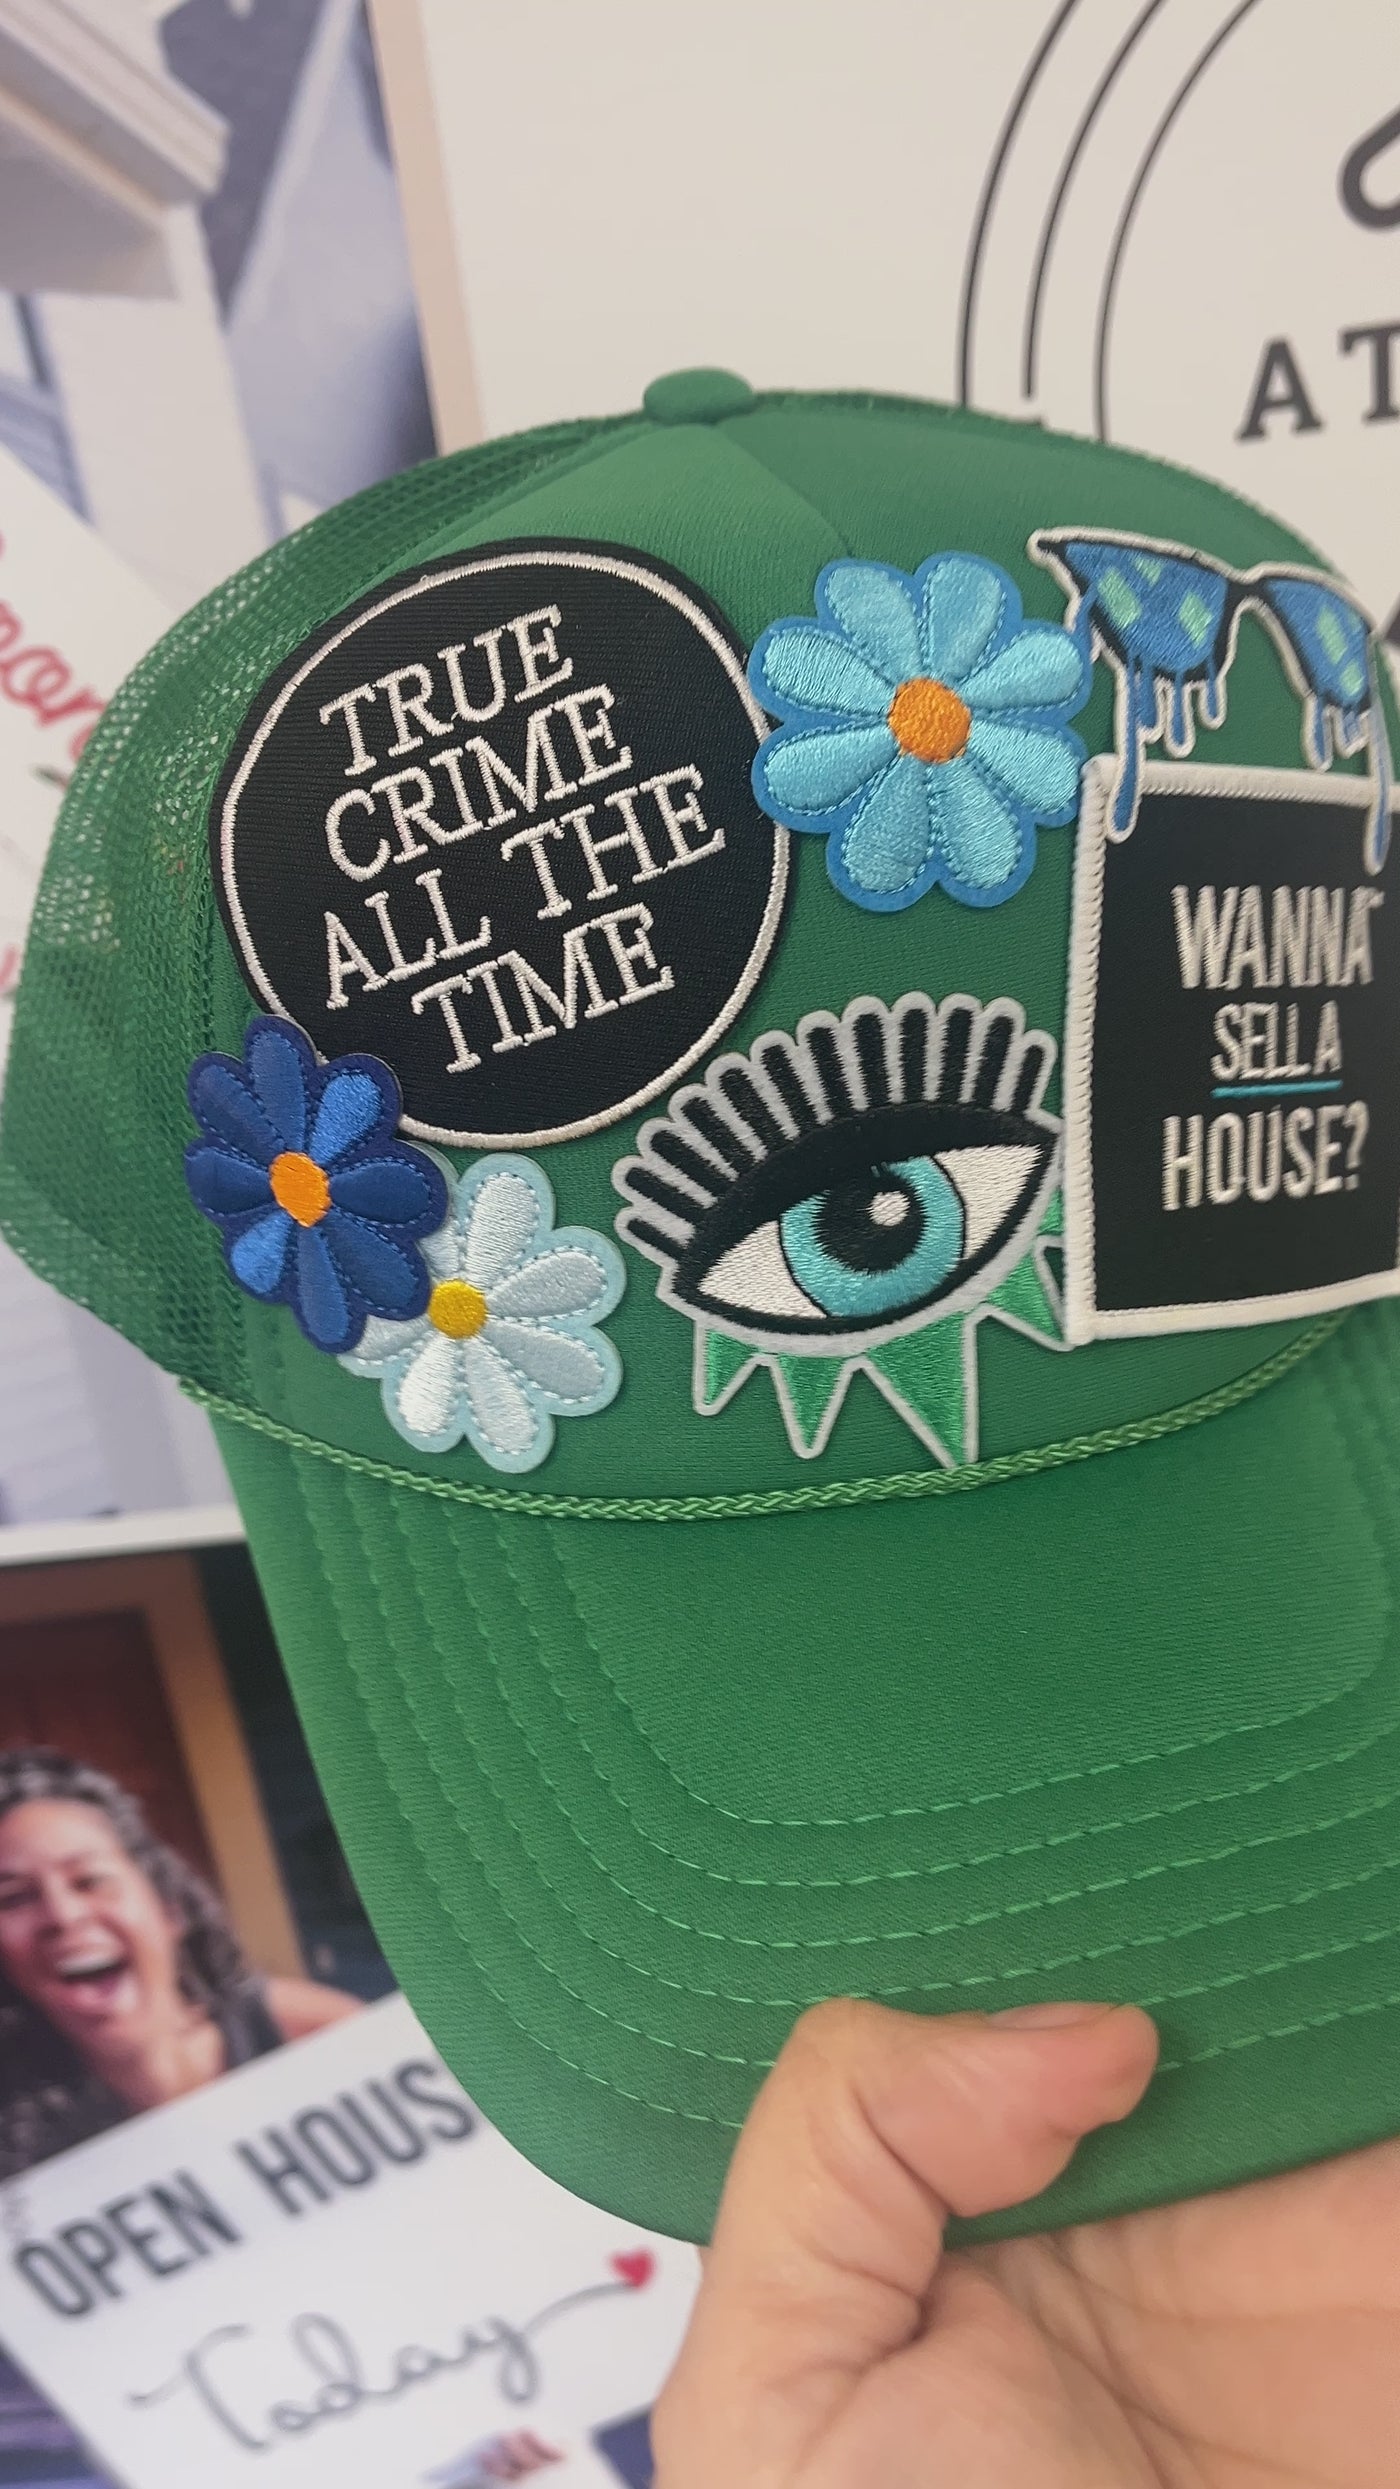 Foam Trucker Hat - Wanna Sell A House? - Flowers - True Crime All the Time - Evil eye - Sunglasses